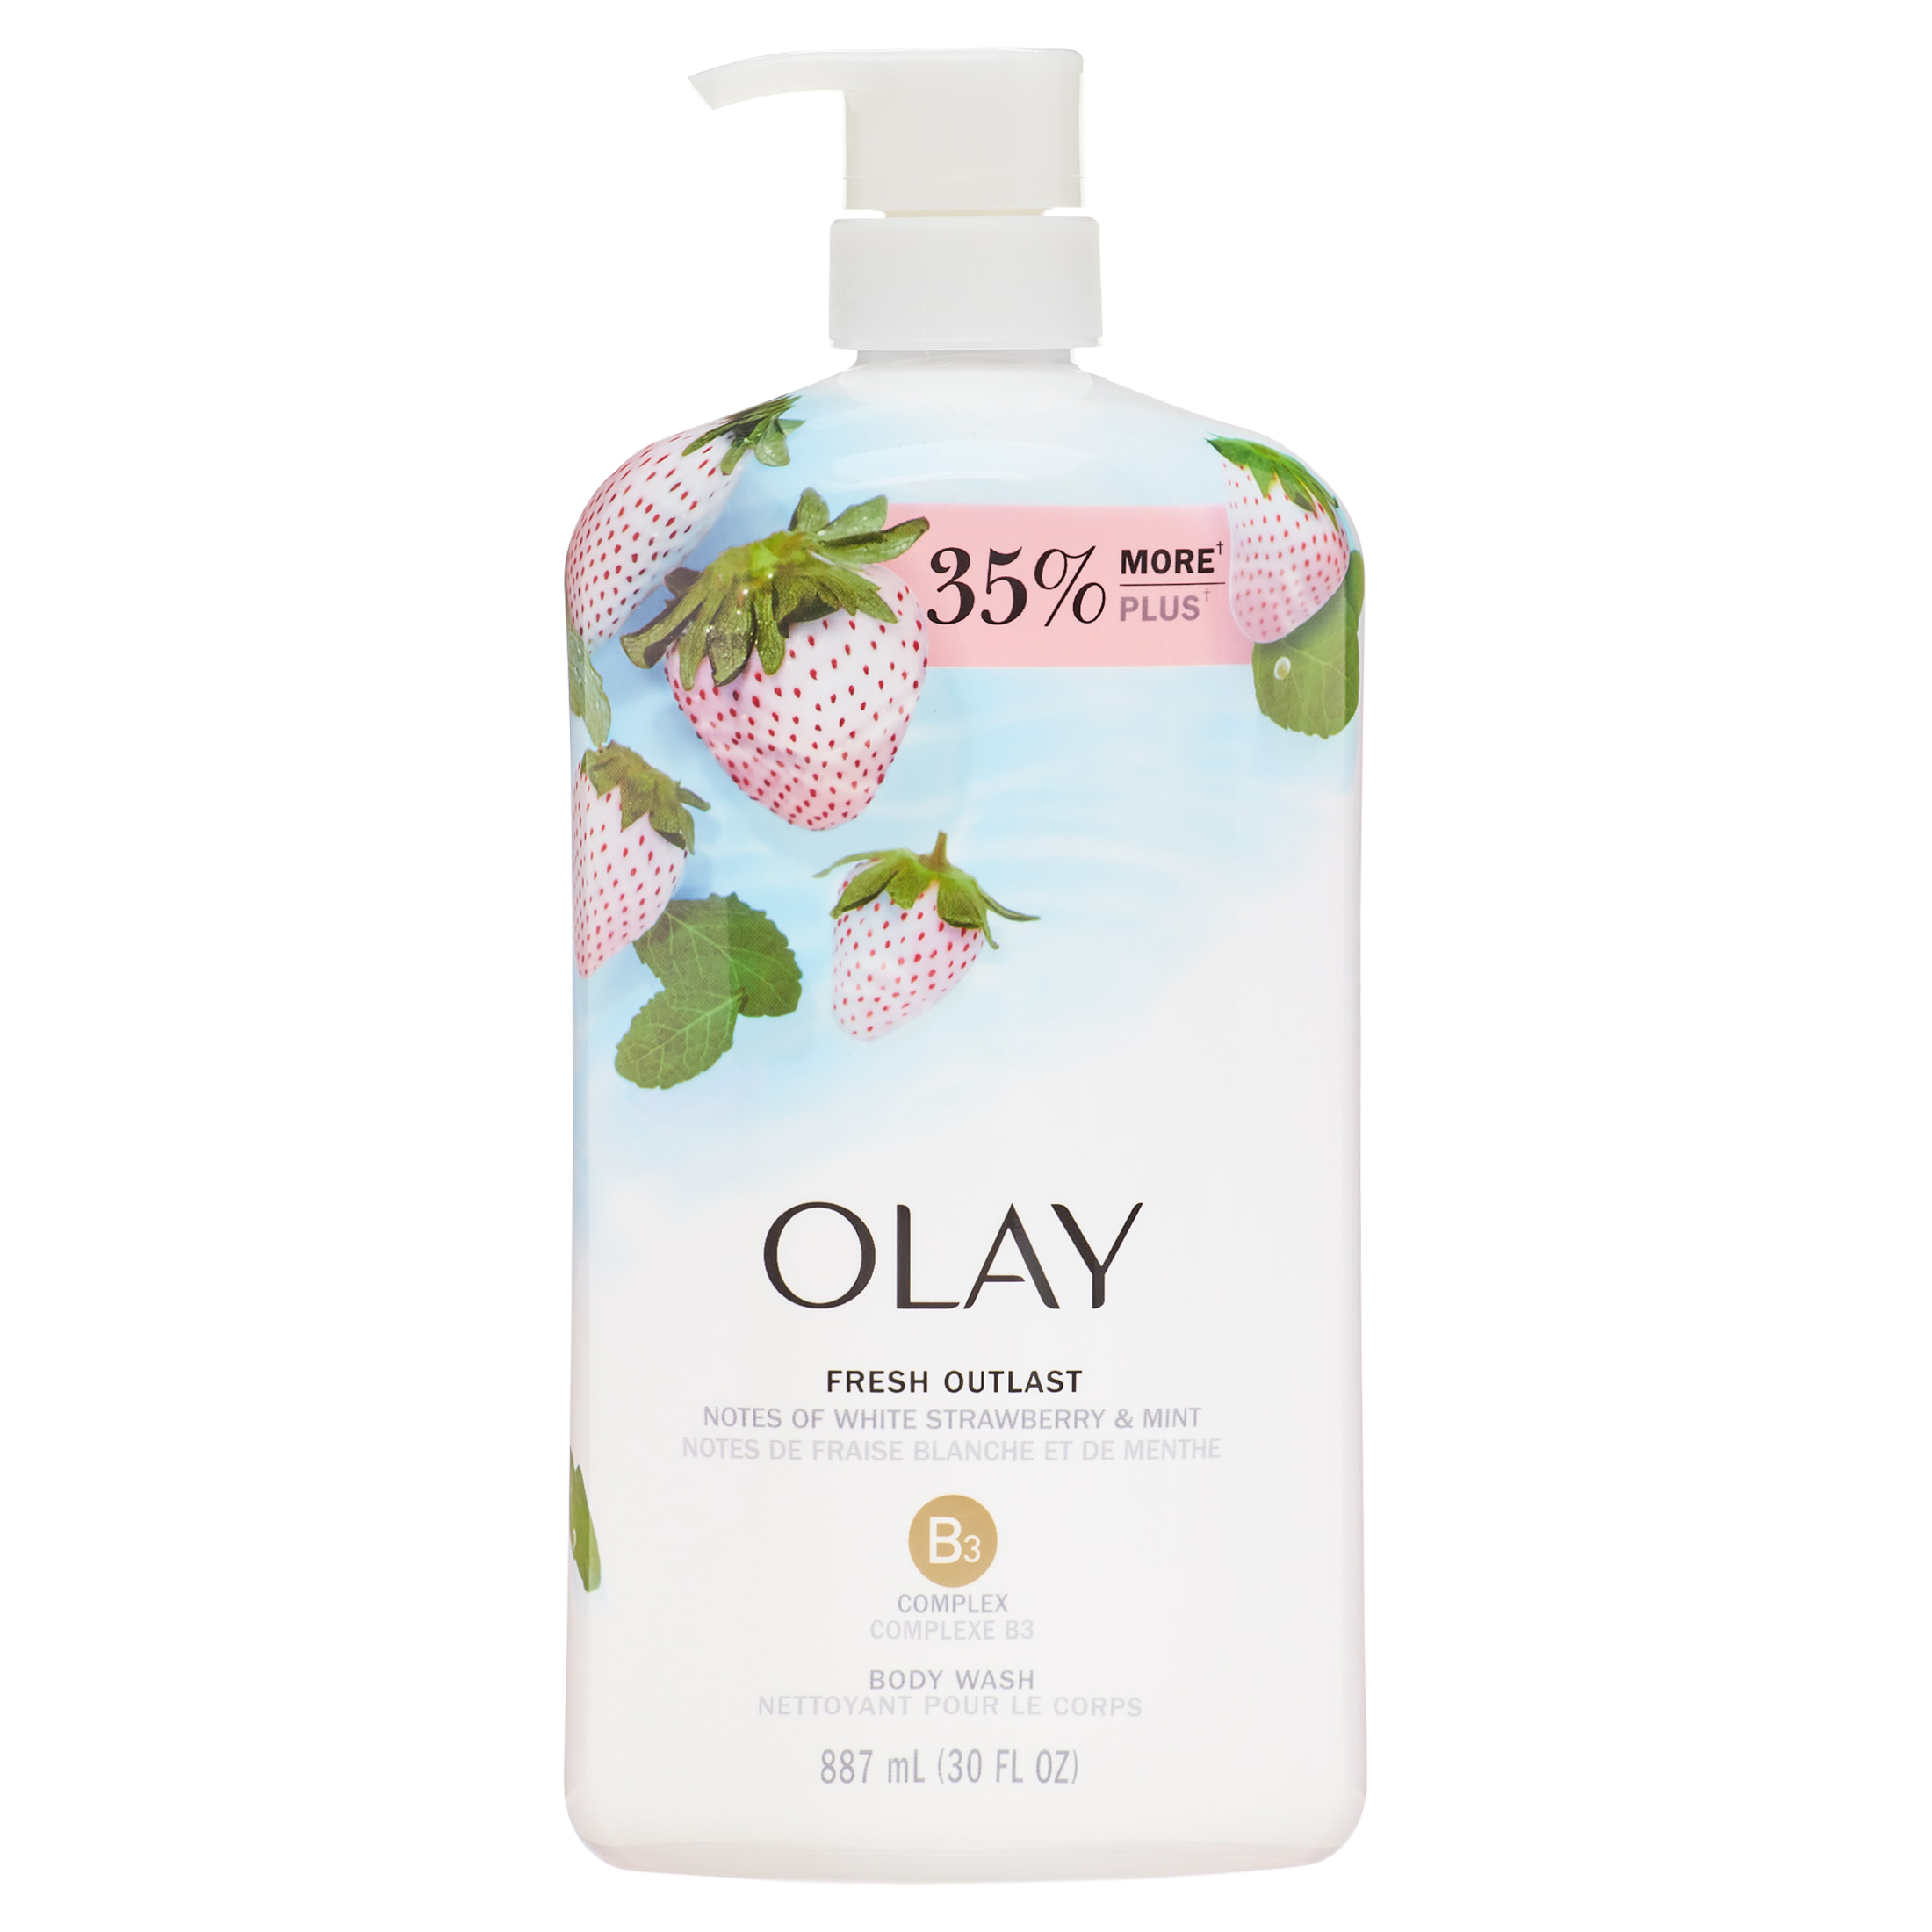 Olay Fresh Outlast Body Wash, White Strawberry & Mint, All Skin Types, 30 fl oz - image 1 of 7